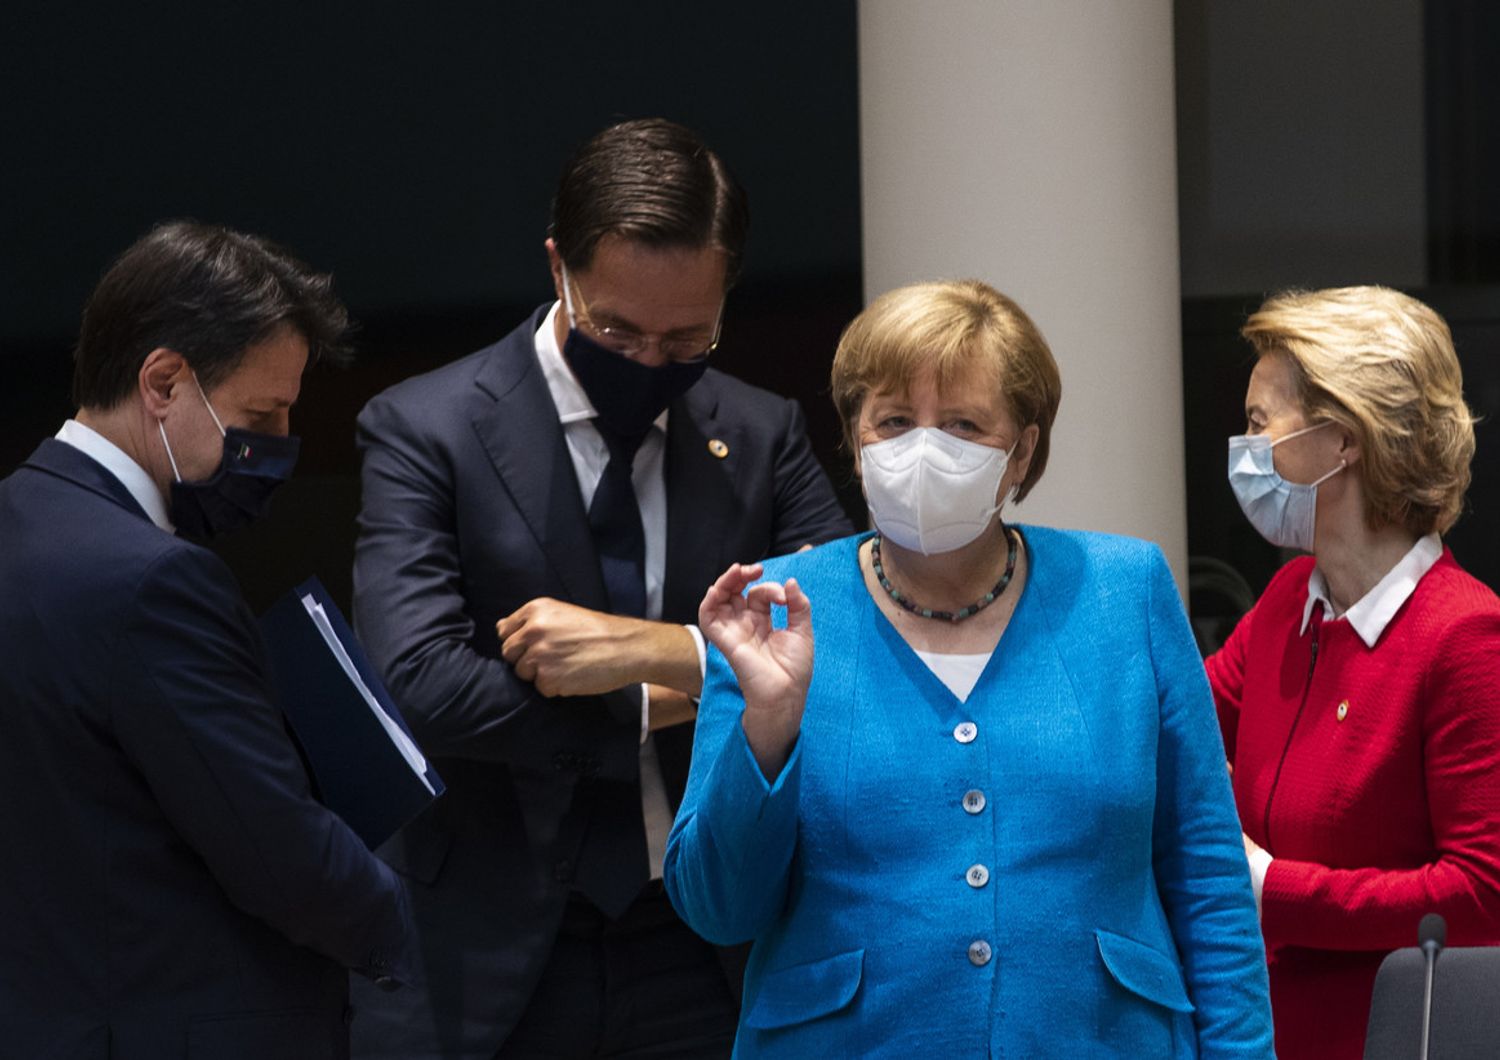 Da sinistra: Giuseppe Conte, Mark Rutte, Angela Merkel e Ursula von der Leyen al Consiglio europeo oggi